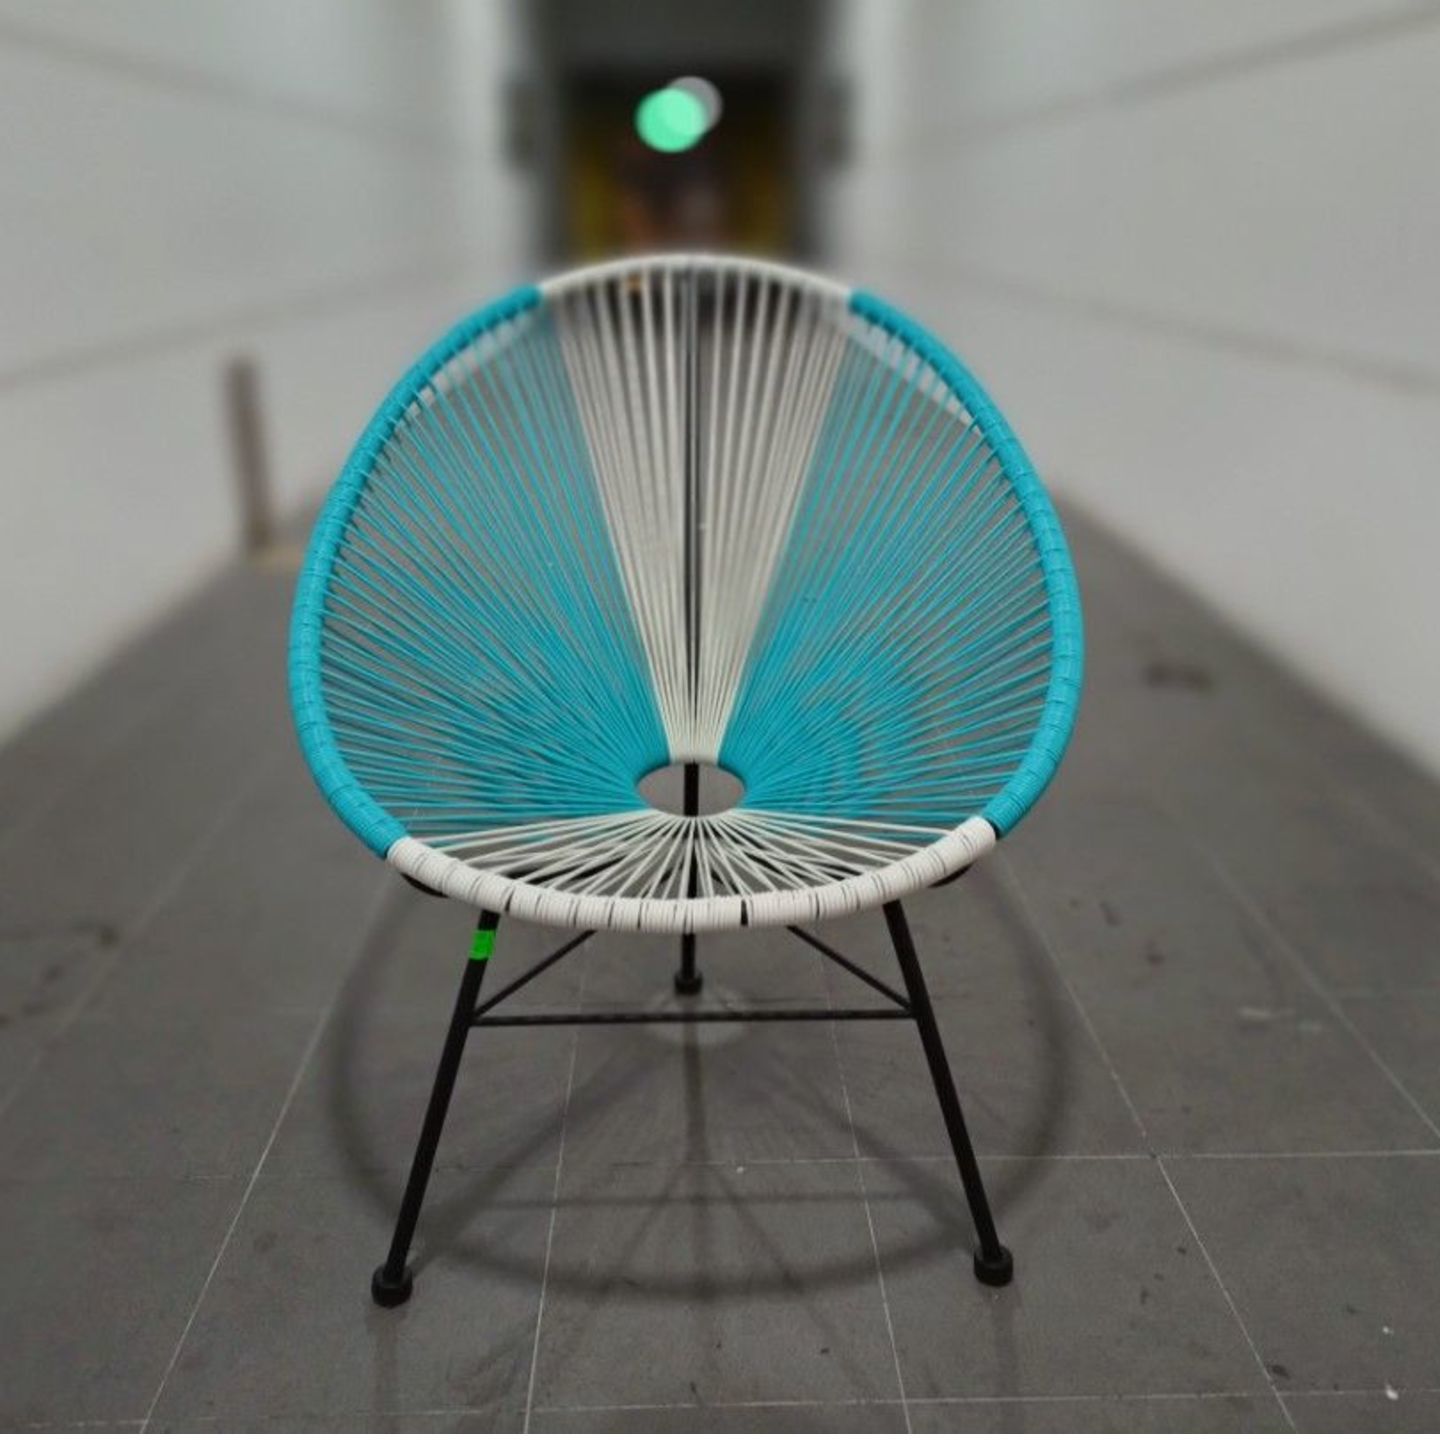 VONA Patio Wicker Chair in BLUE & WHITE